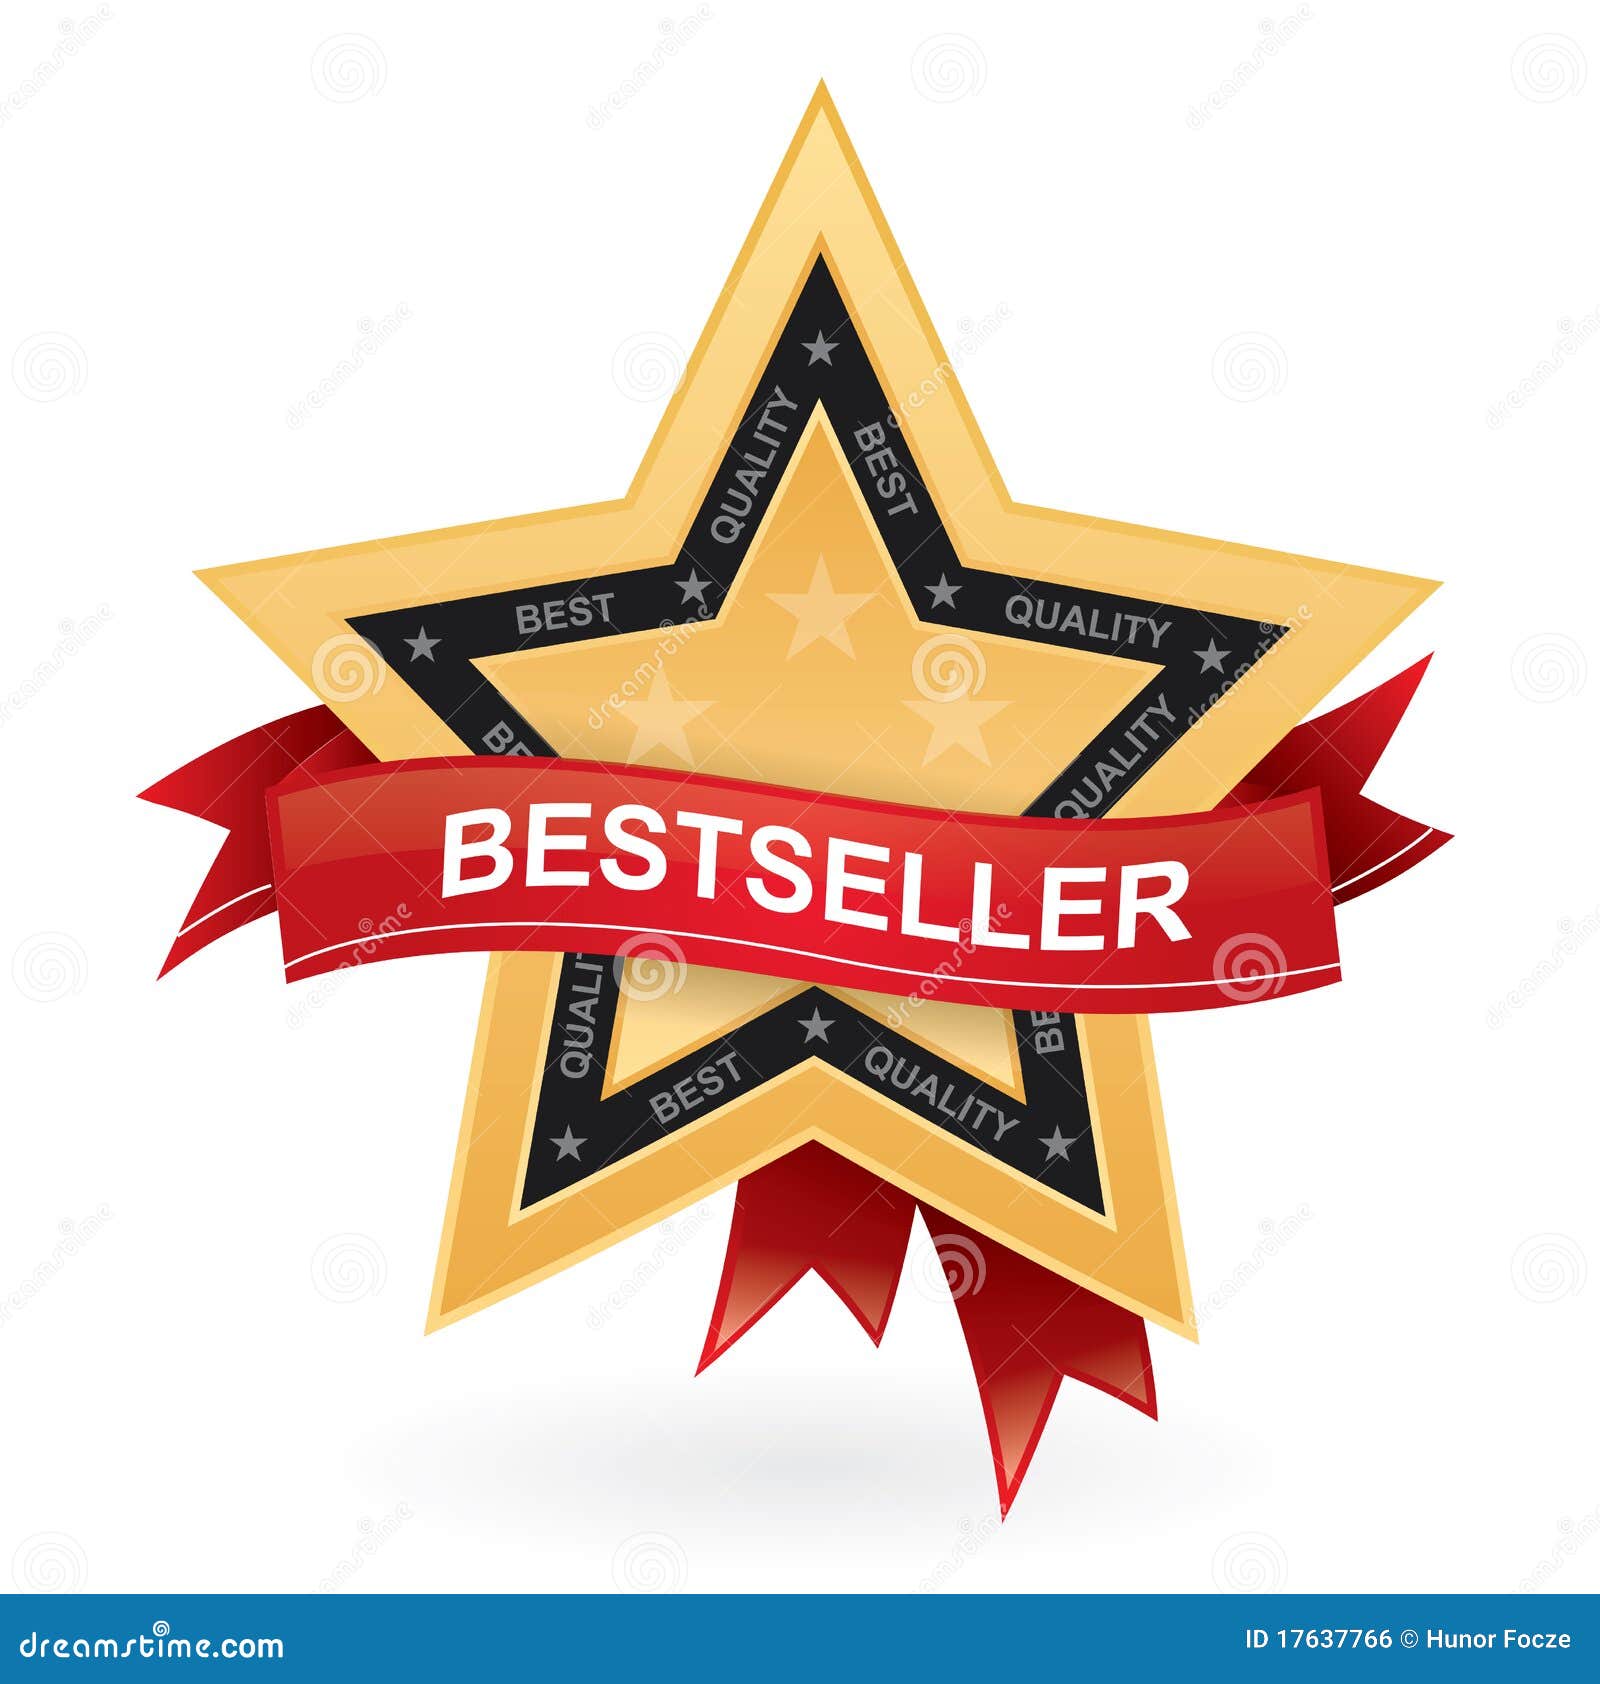 bestseller promotional sign - gold star wit